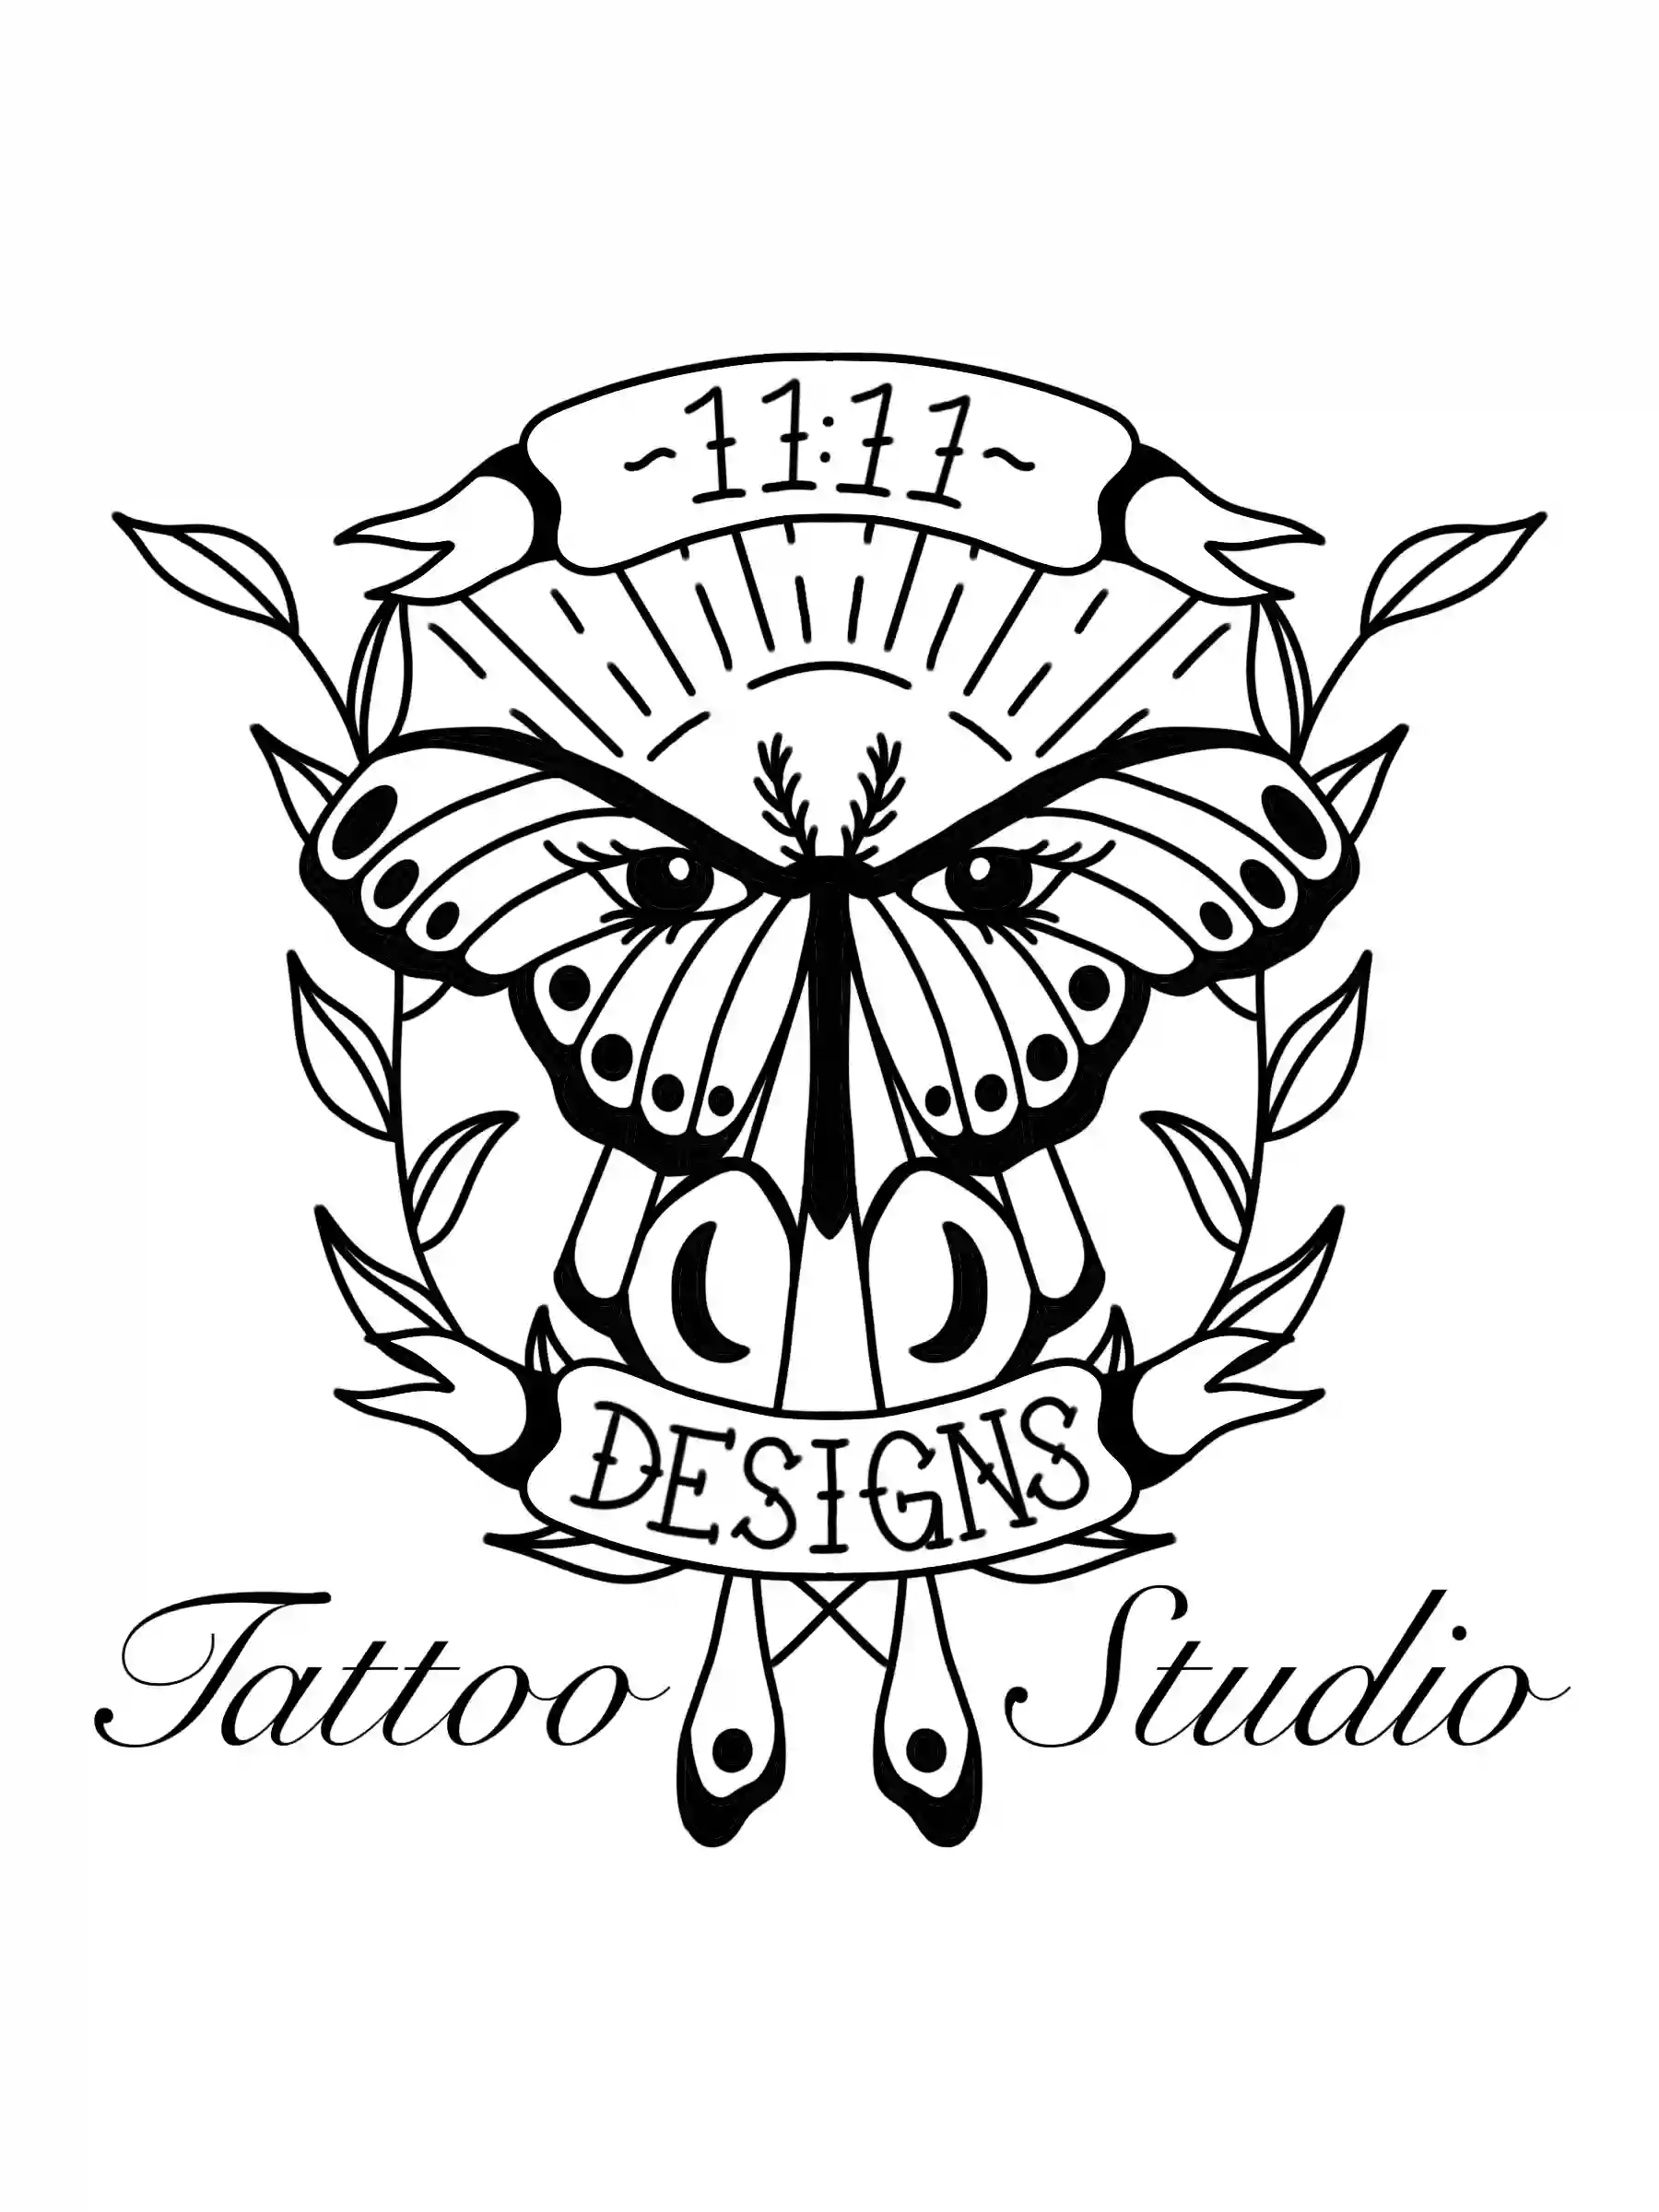 11:11 Designs Tattoo Studio